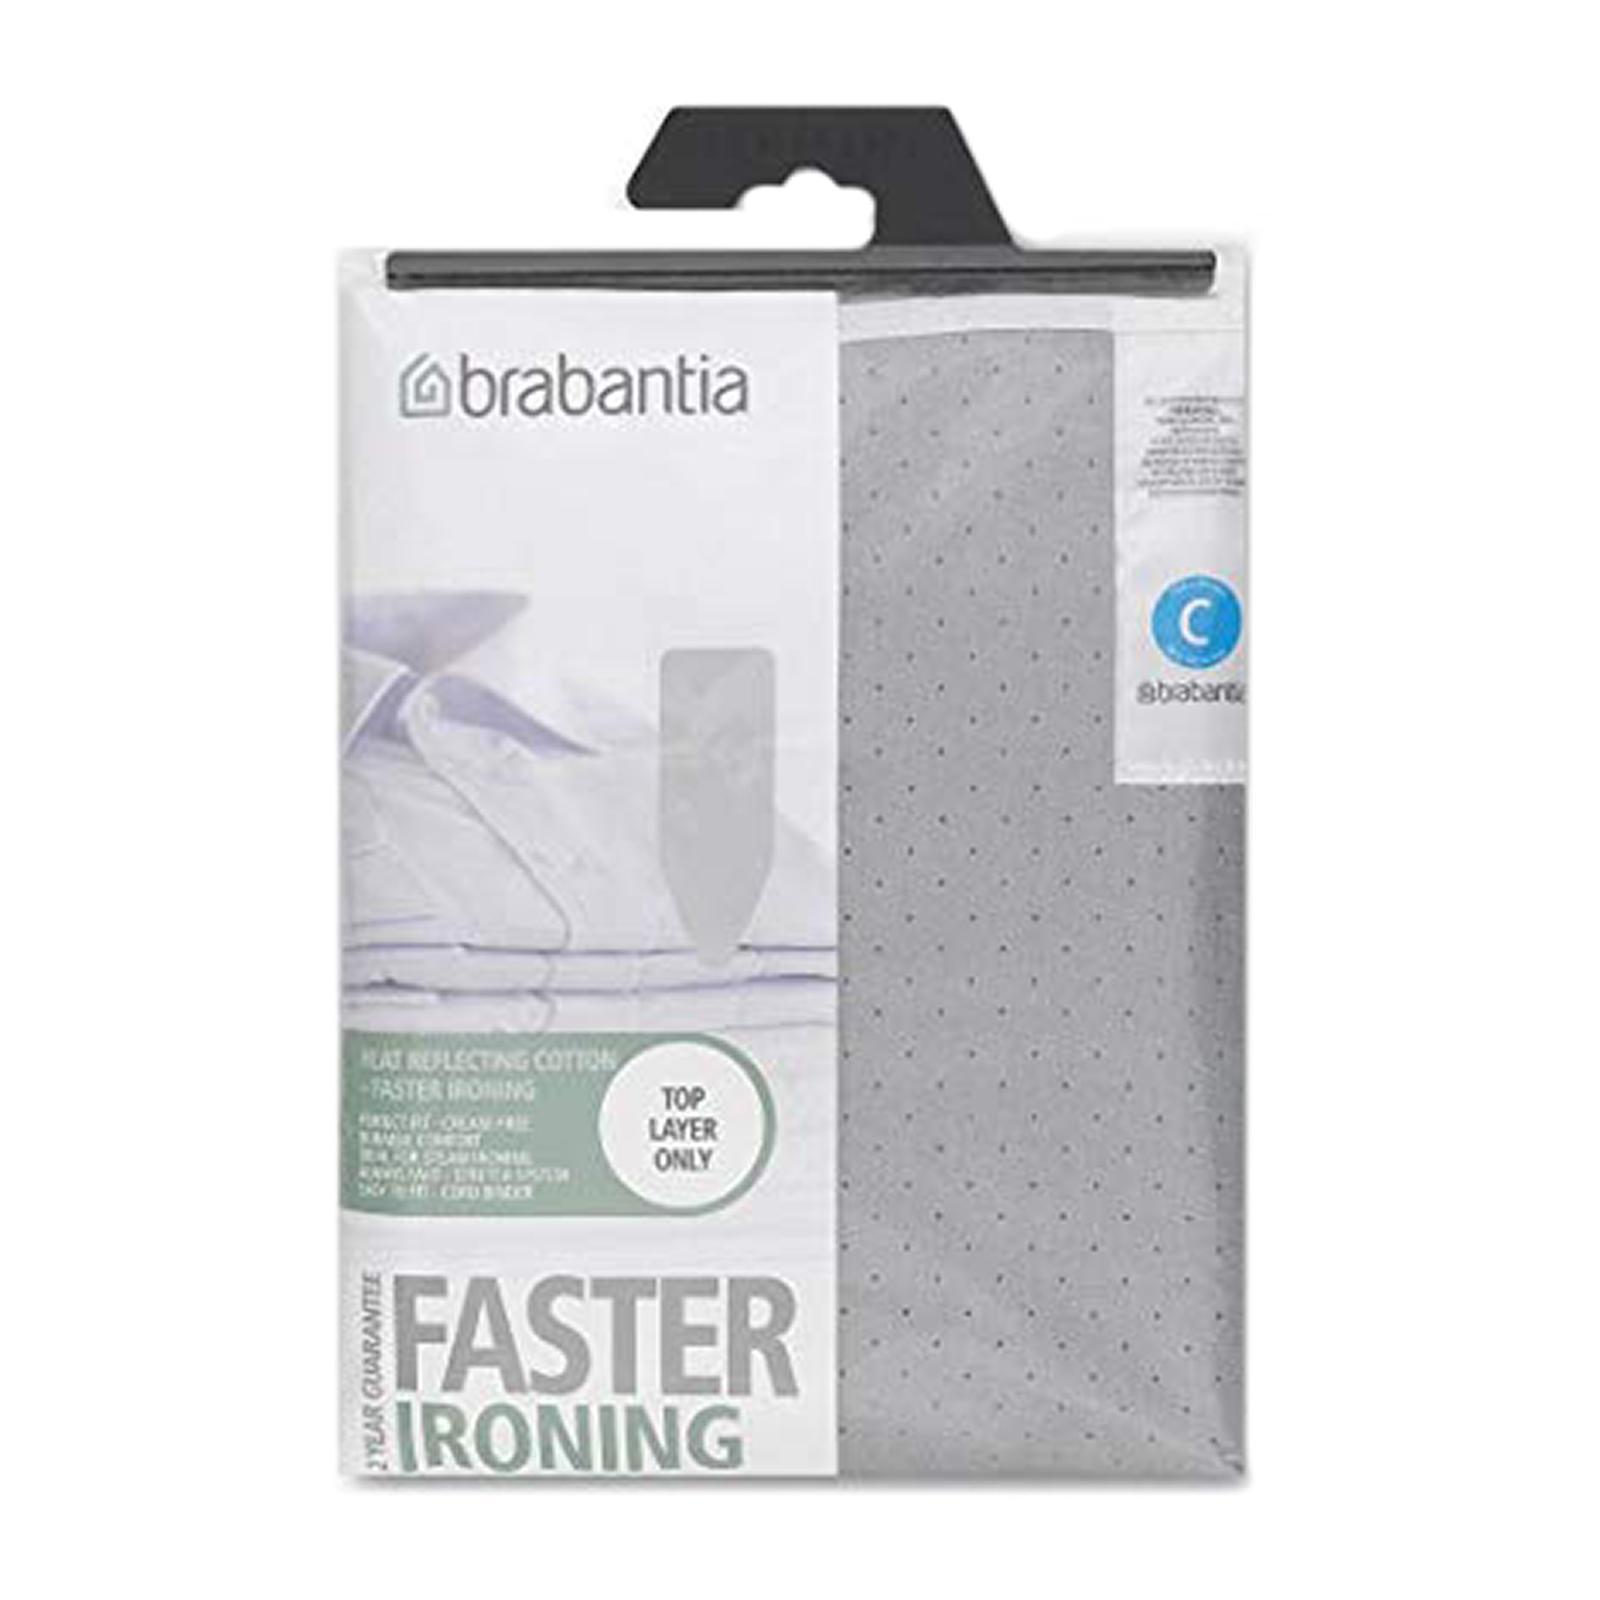 Brabantia Brabantia Cotton Ironing Board Cover C 124 45 2mm Foam Top Layer Assorted  785934096229 